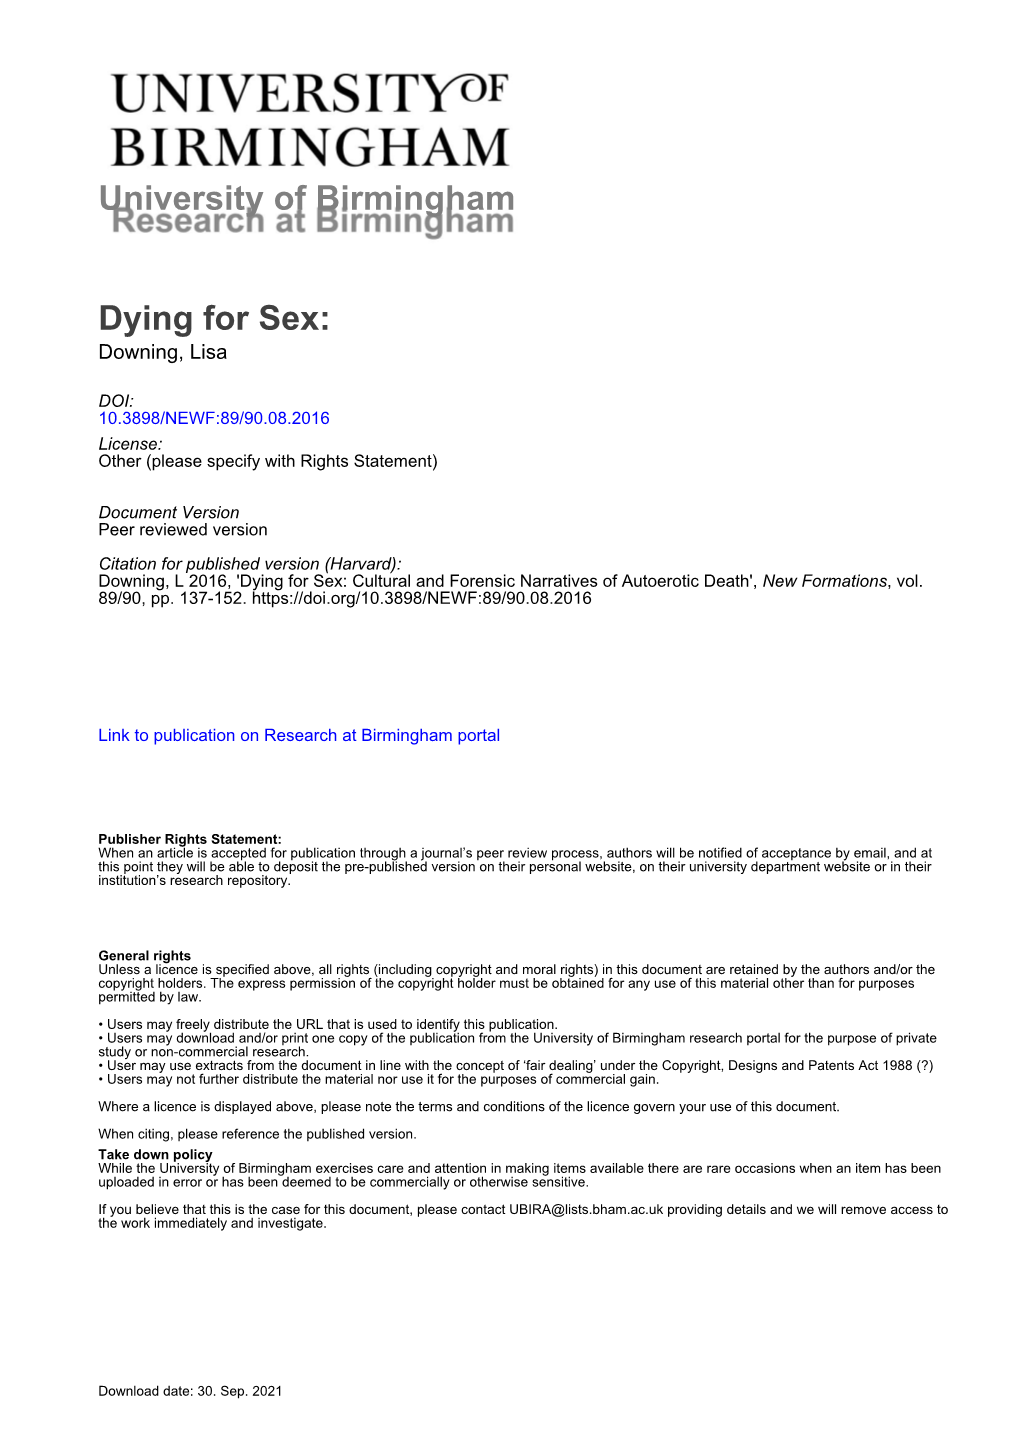 University of Birmingham Dying for Sex